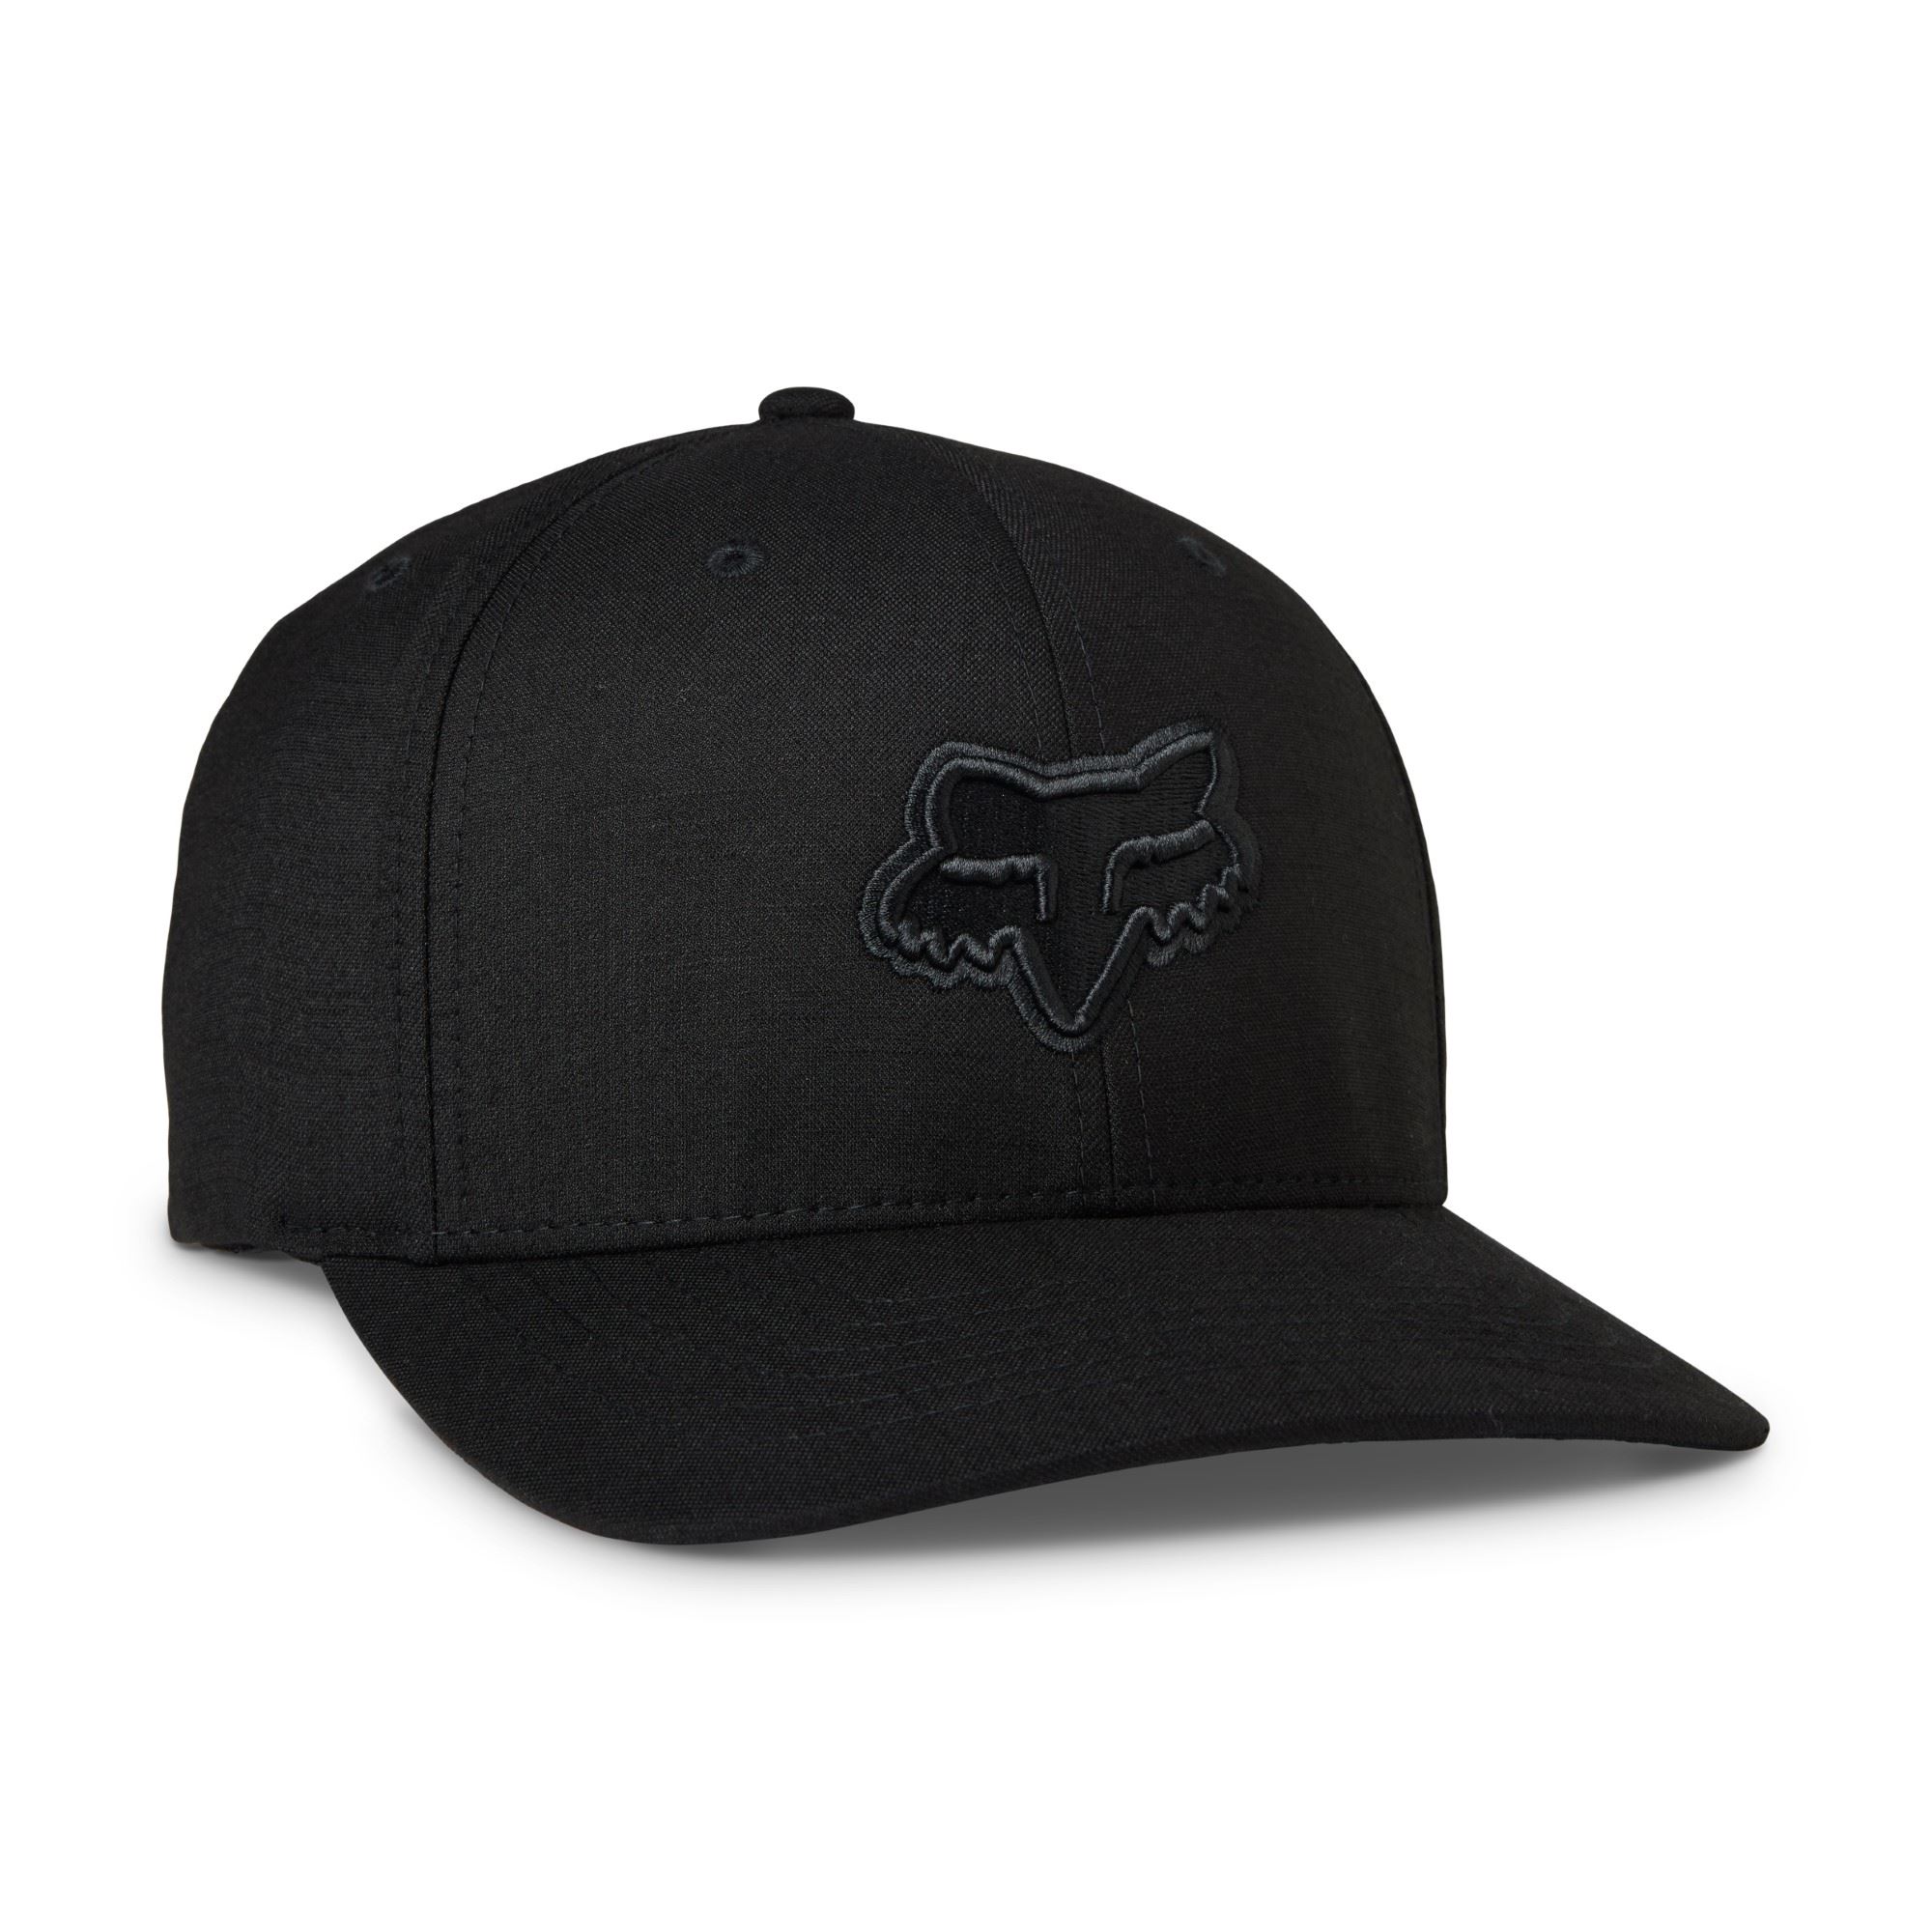 Transposition Black Flexfit Hat Fox Racing